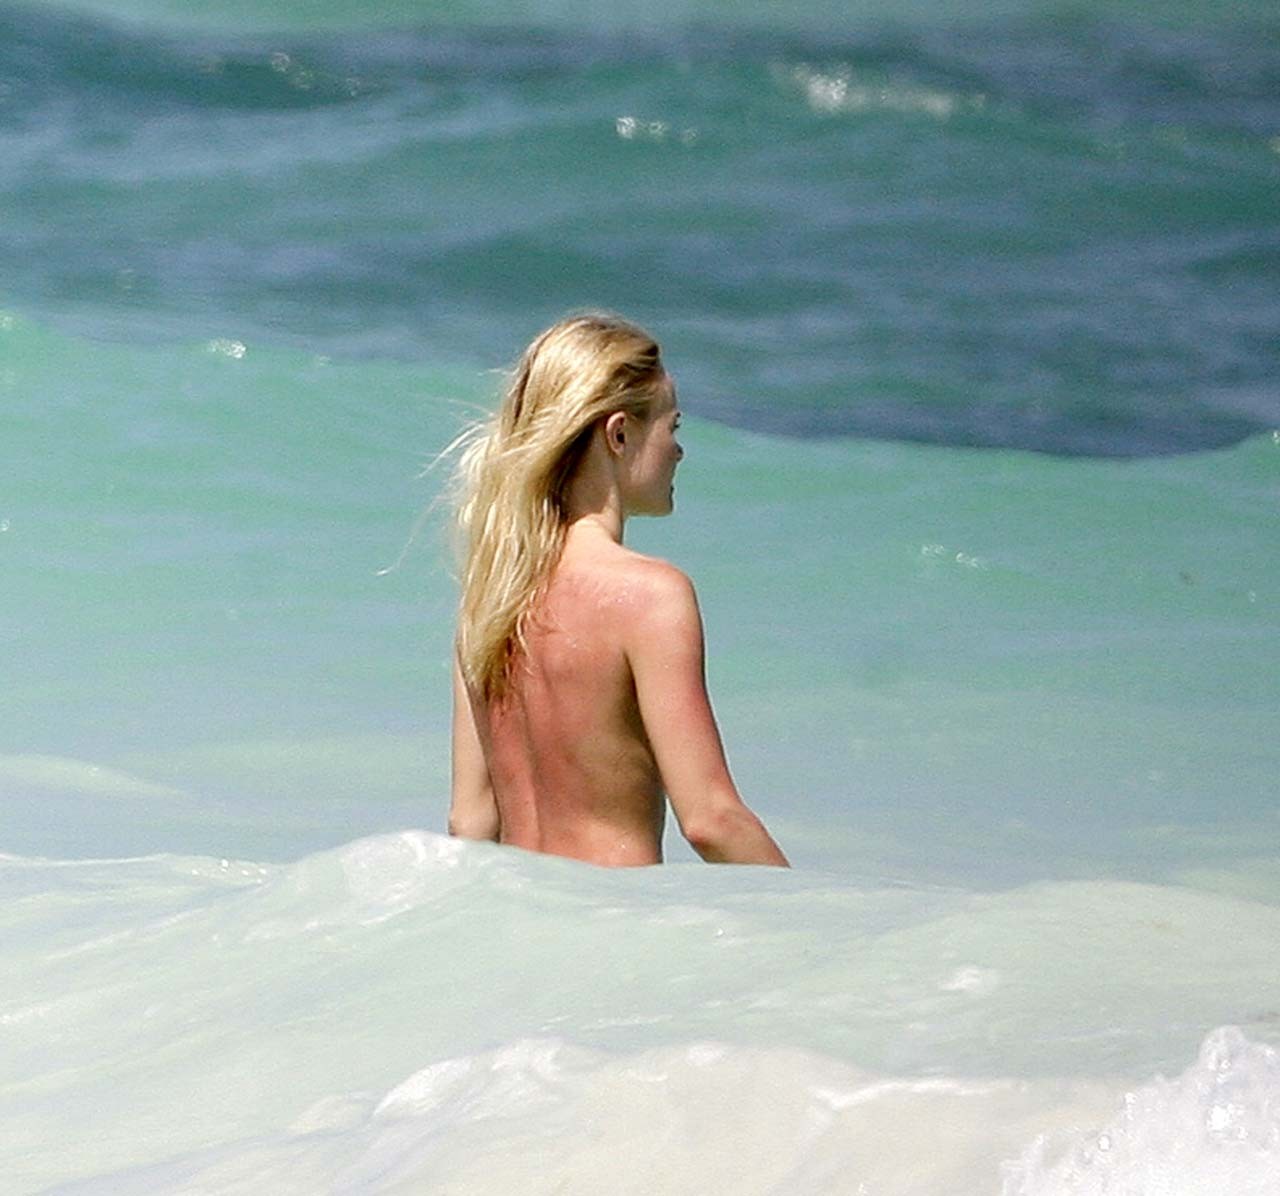 Kate Bosworth enjoying on beach in topless and exposing her sexy bikini body #75308822